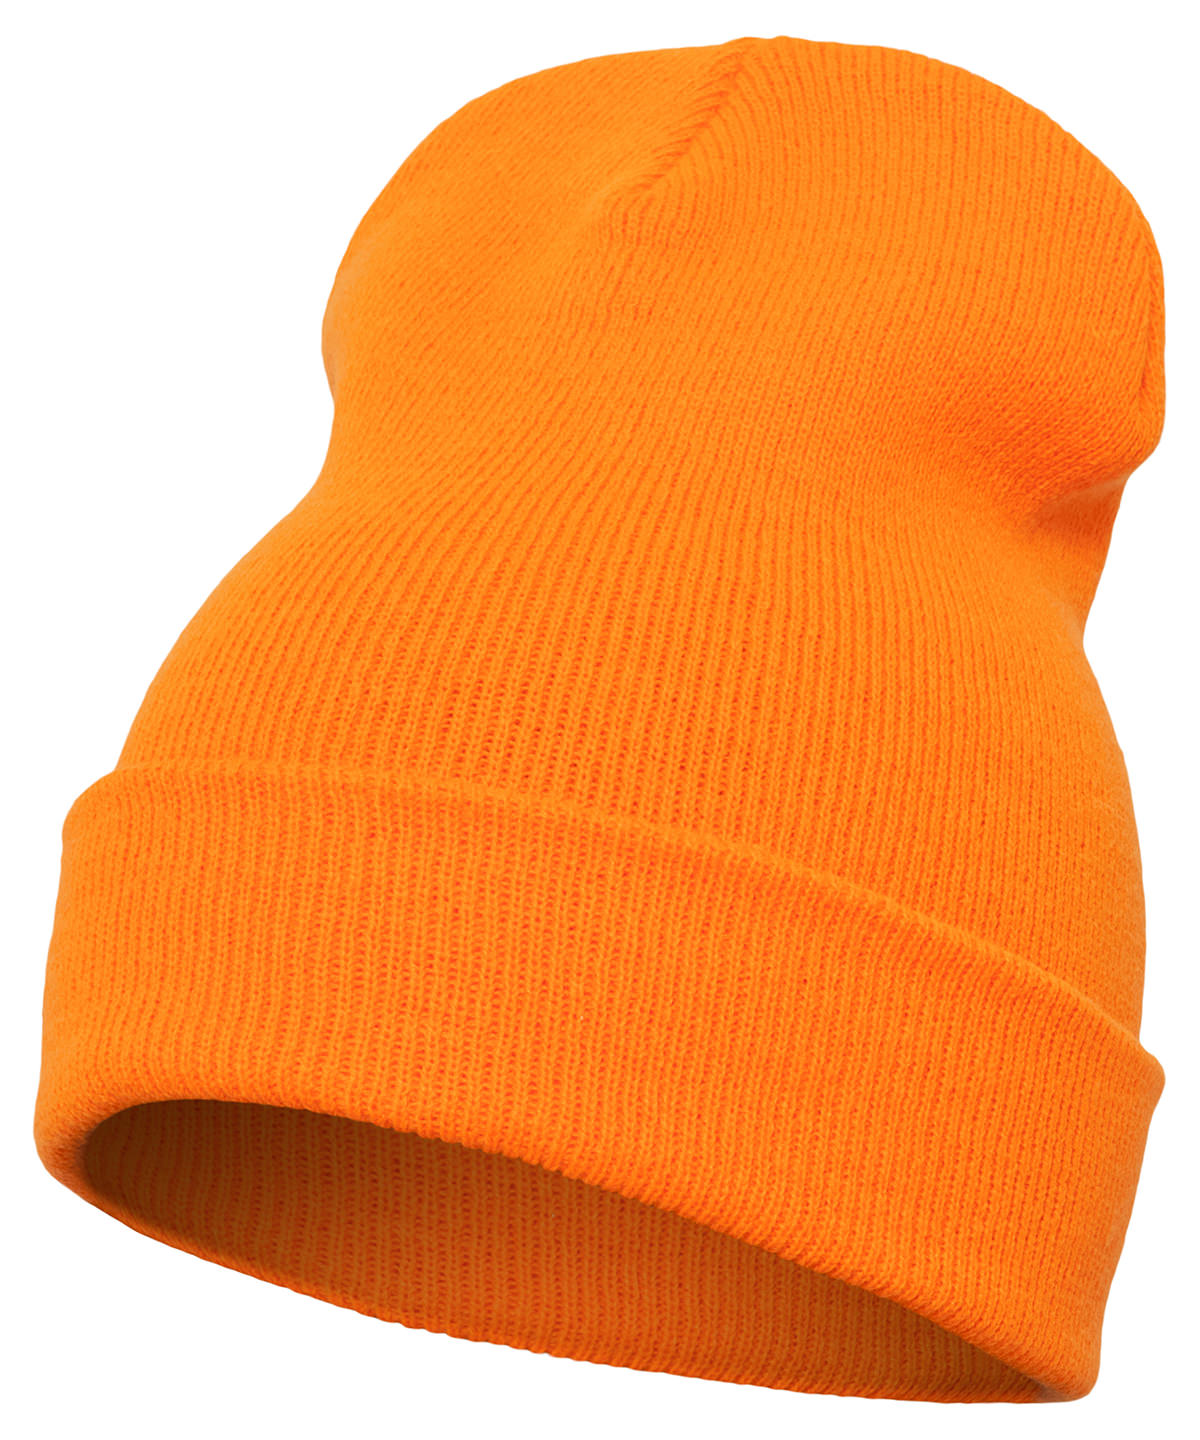 Blaze Orange - Heavyweight long beanie (1501KC) Flexfit by Yupoong  HeadwearMust HavesNew Colours for 2023Winter Essentials